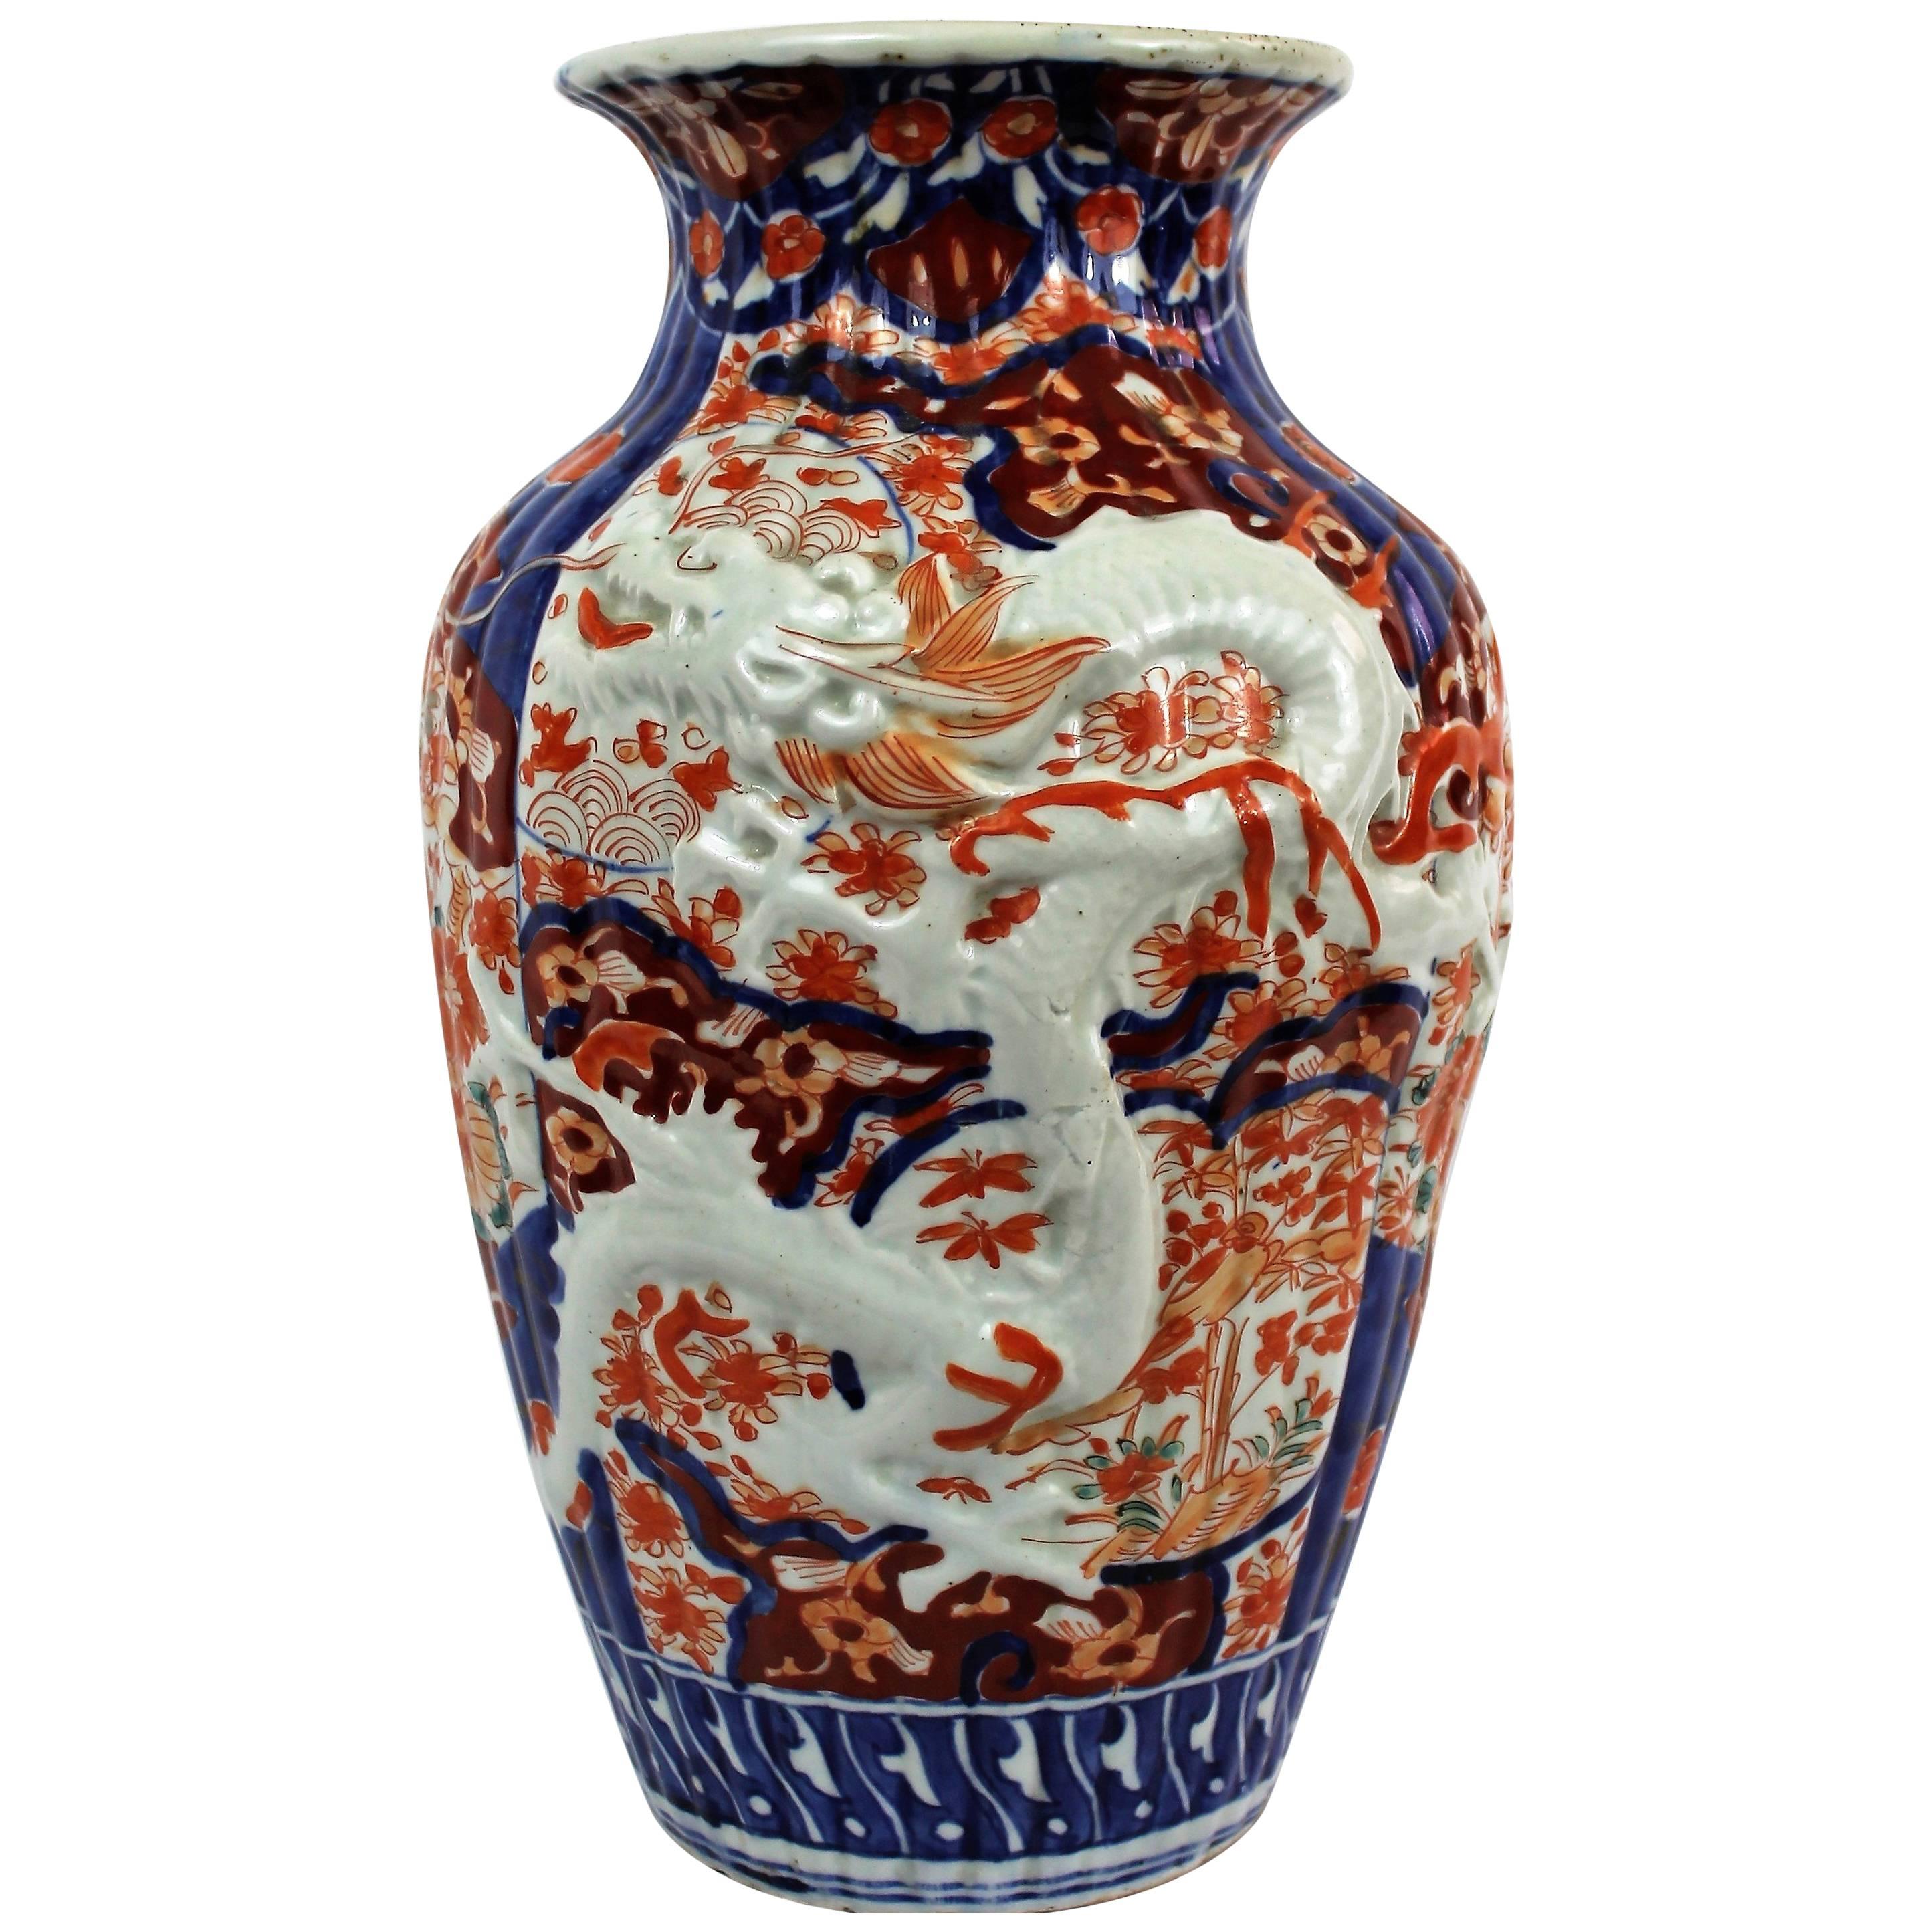 19th Century Imari Porcelain Baluster Vase with Dragon Relief Decoration Japan